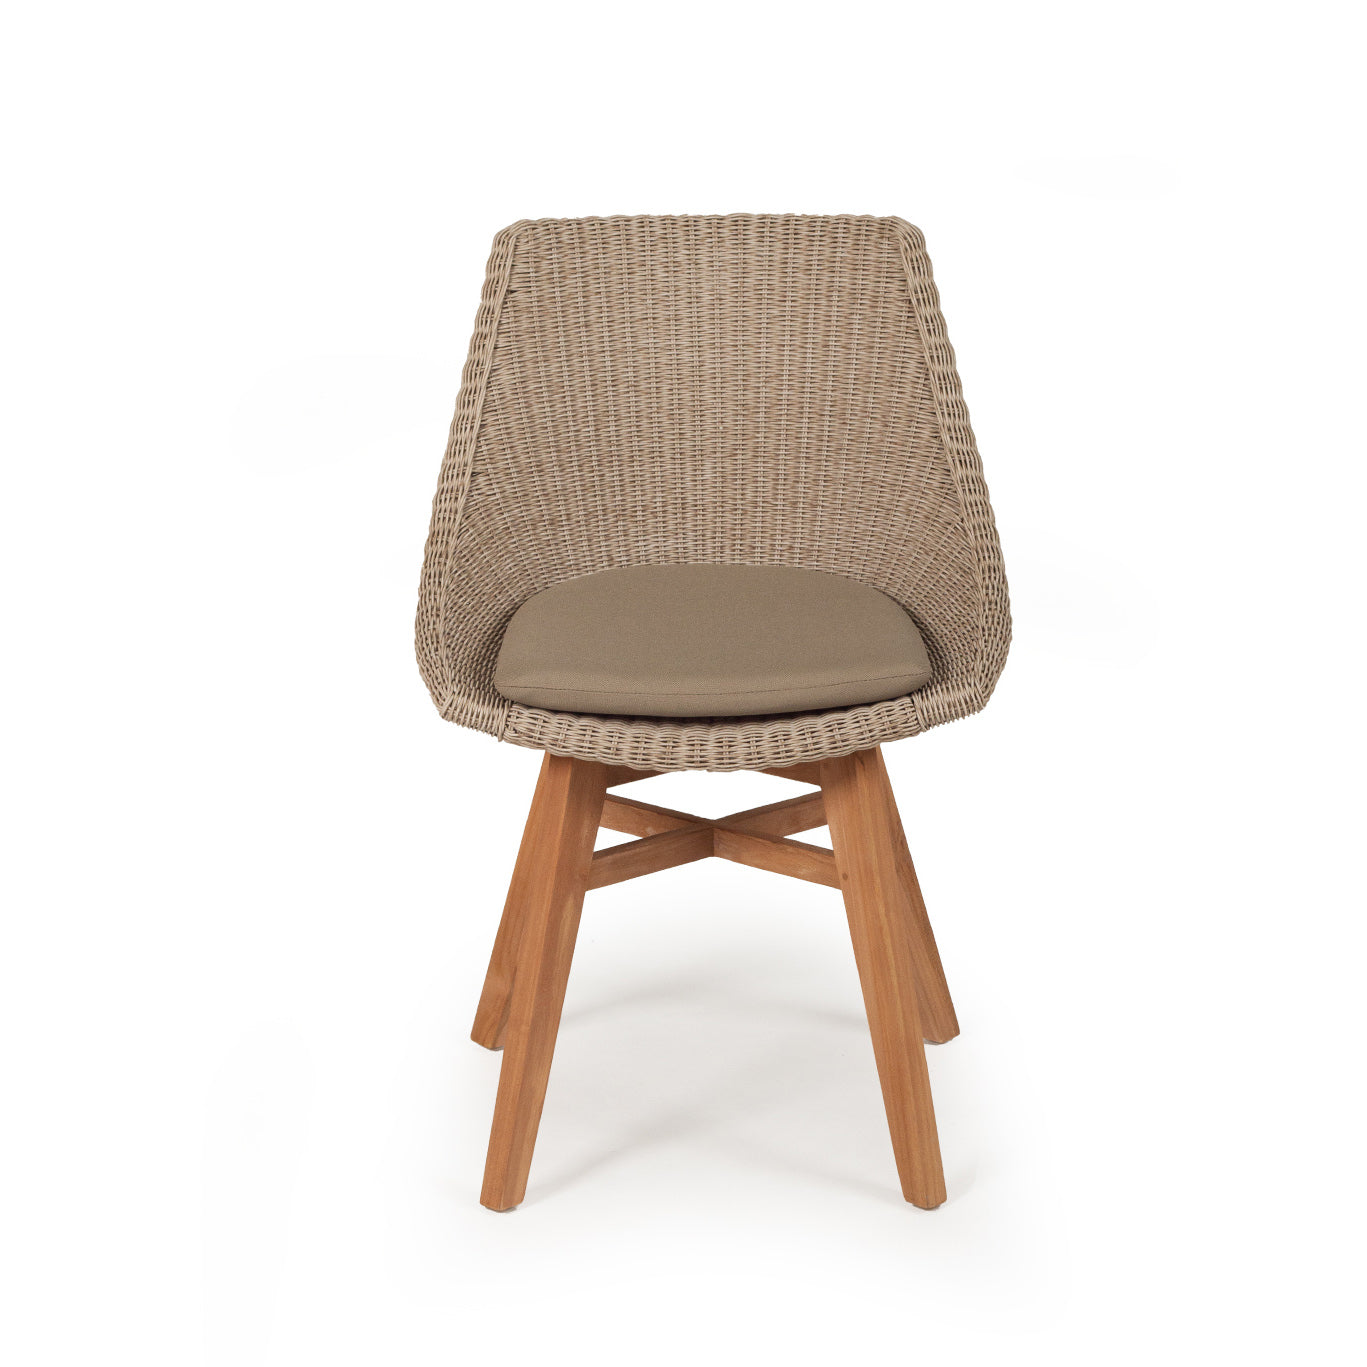 Kalina Outdoor Dining Chair Set – 2 Pieces - NotBrand